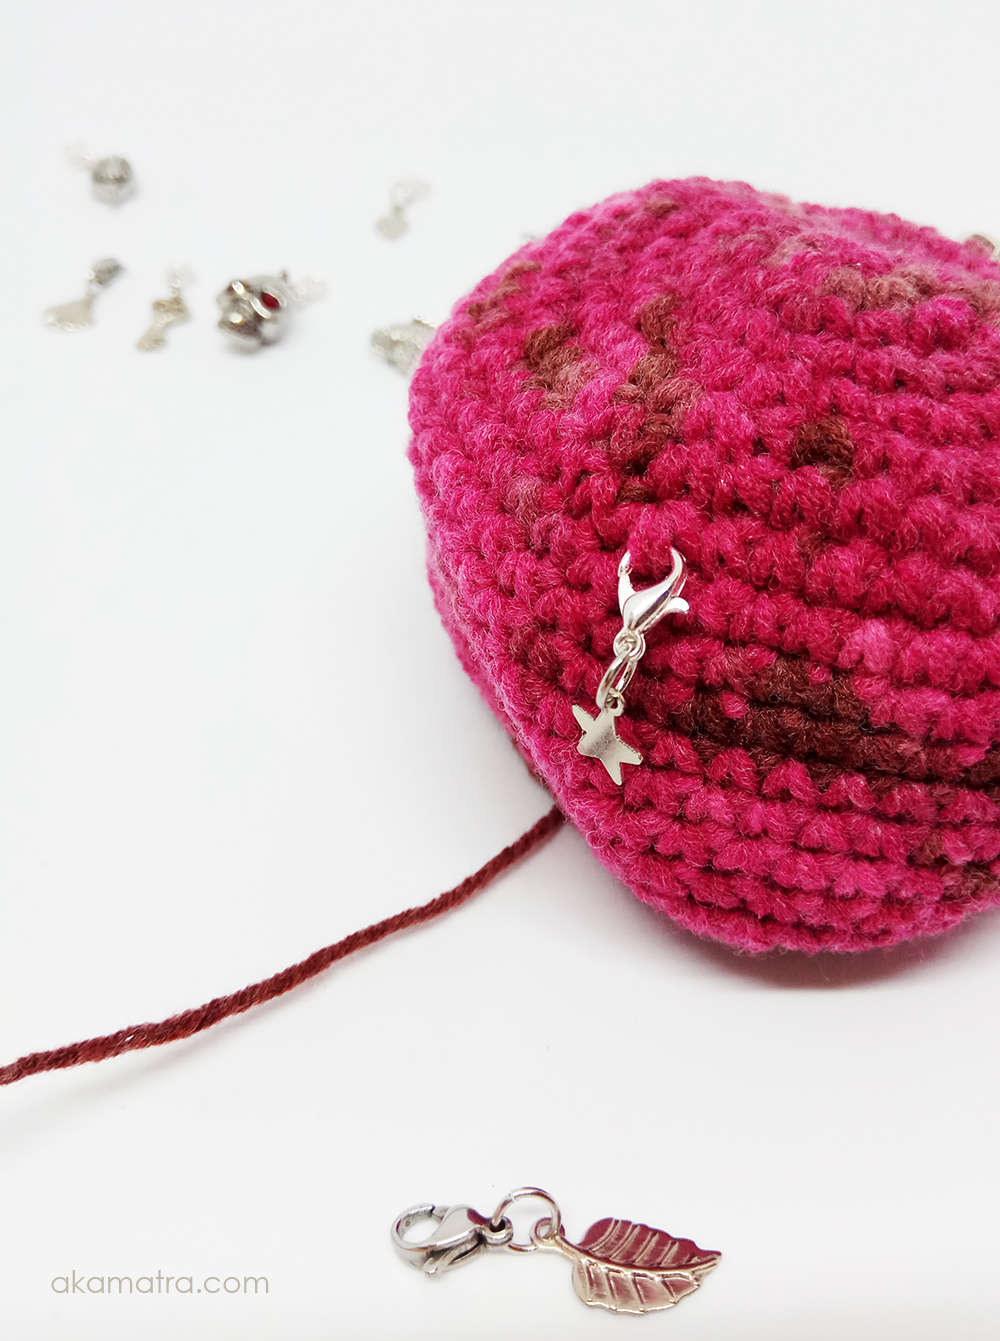 How to make crochet stitch markers - Akamatra